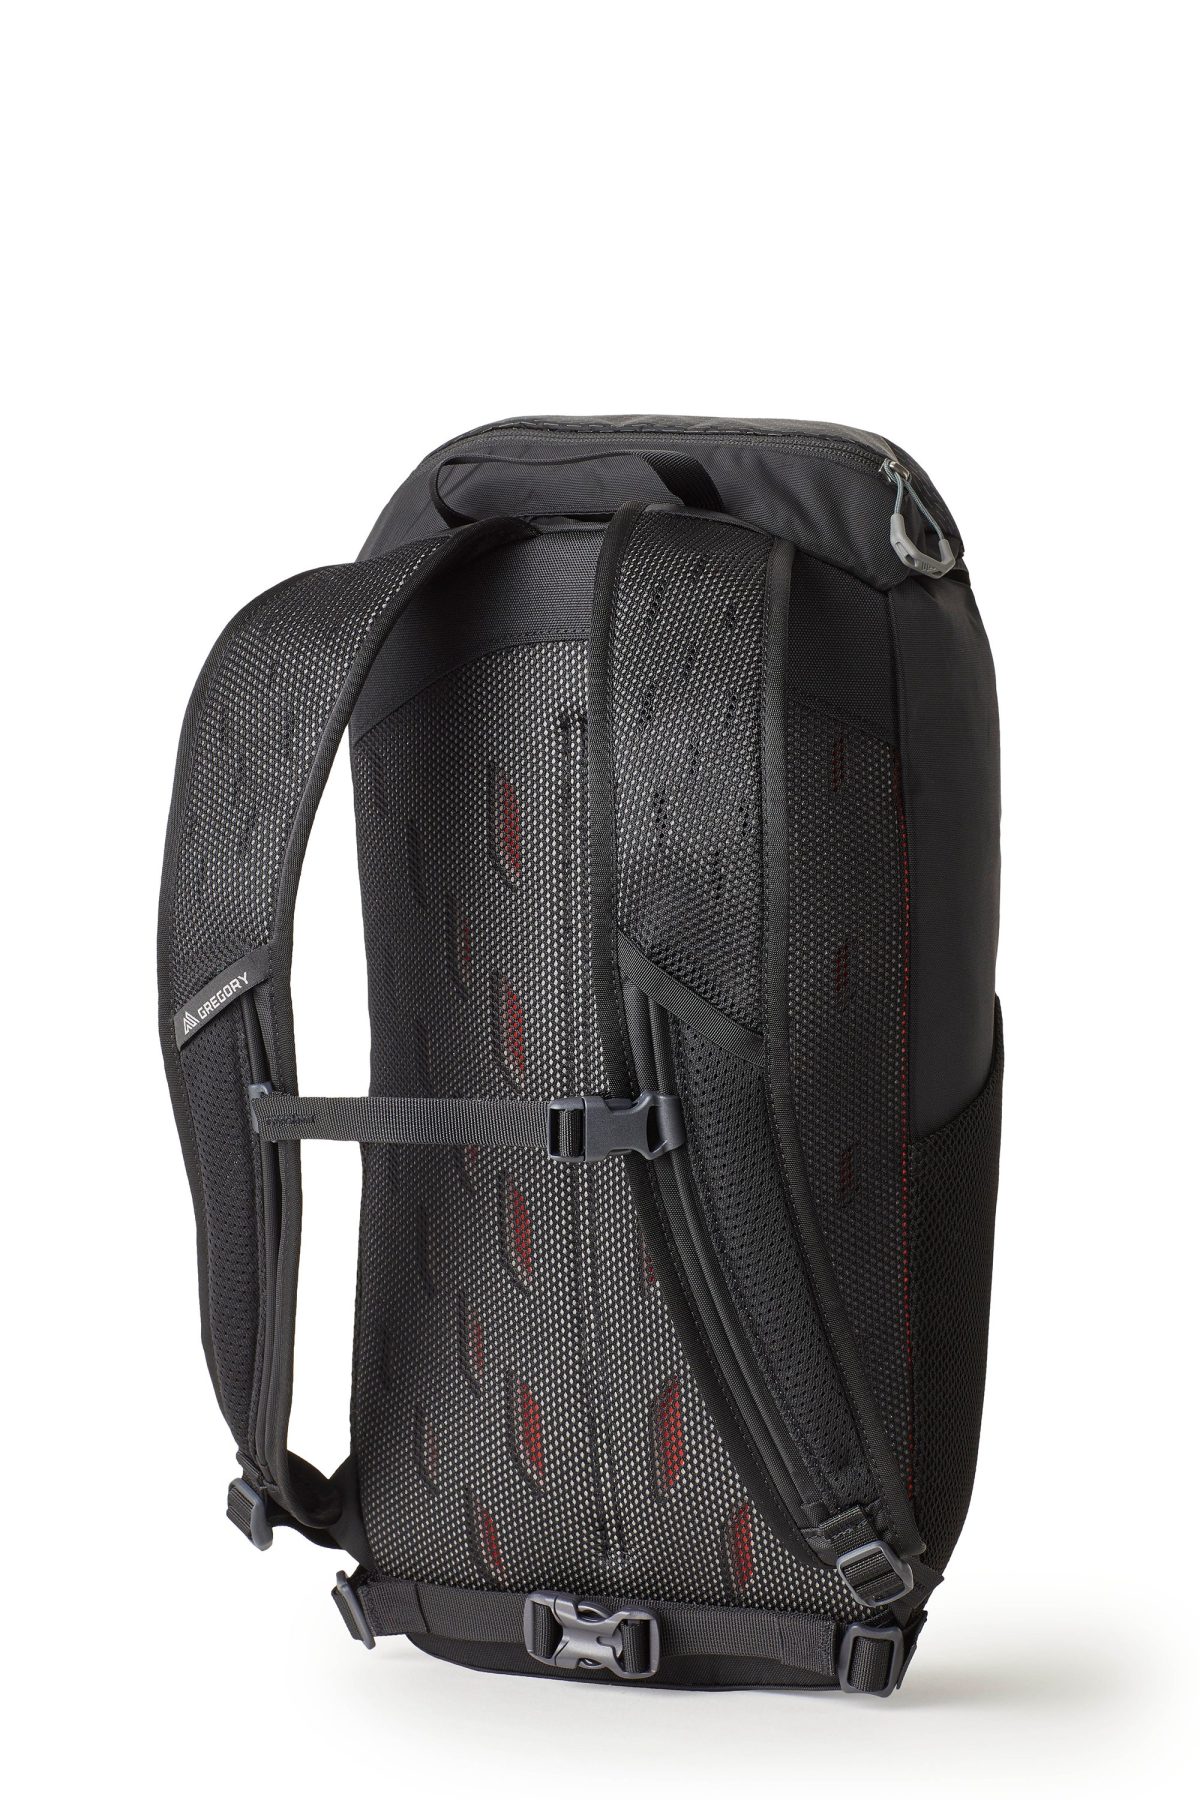 Gregory Nano 16 Plus Size Daypack